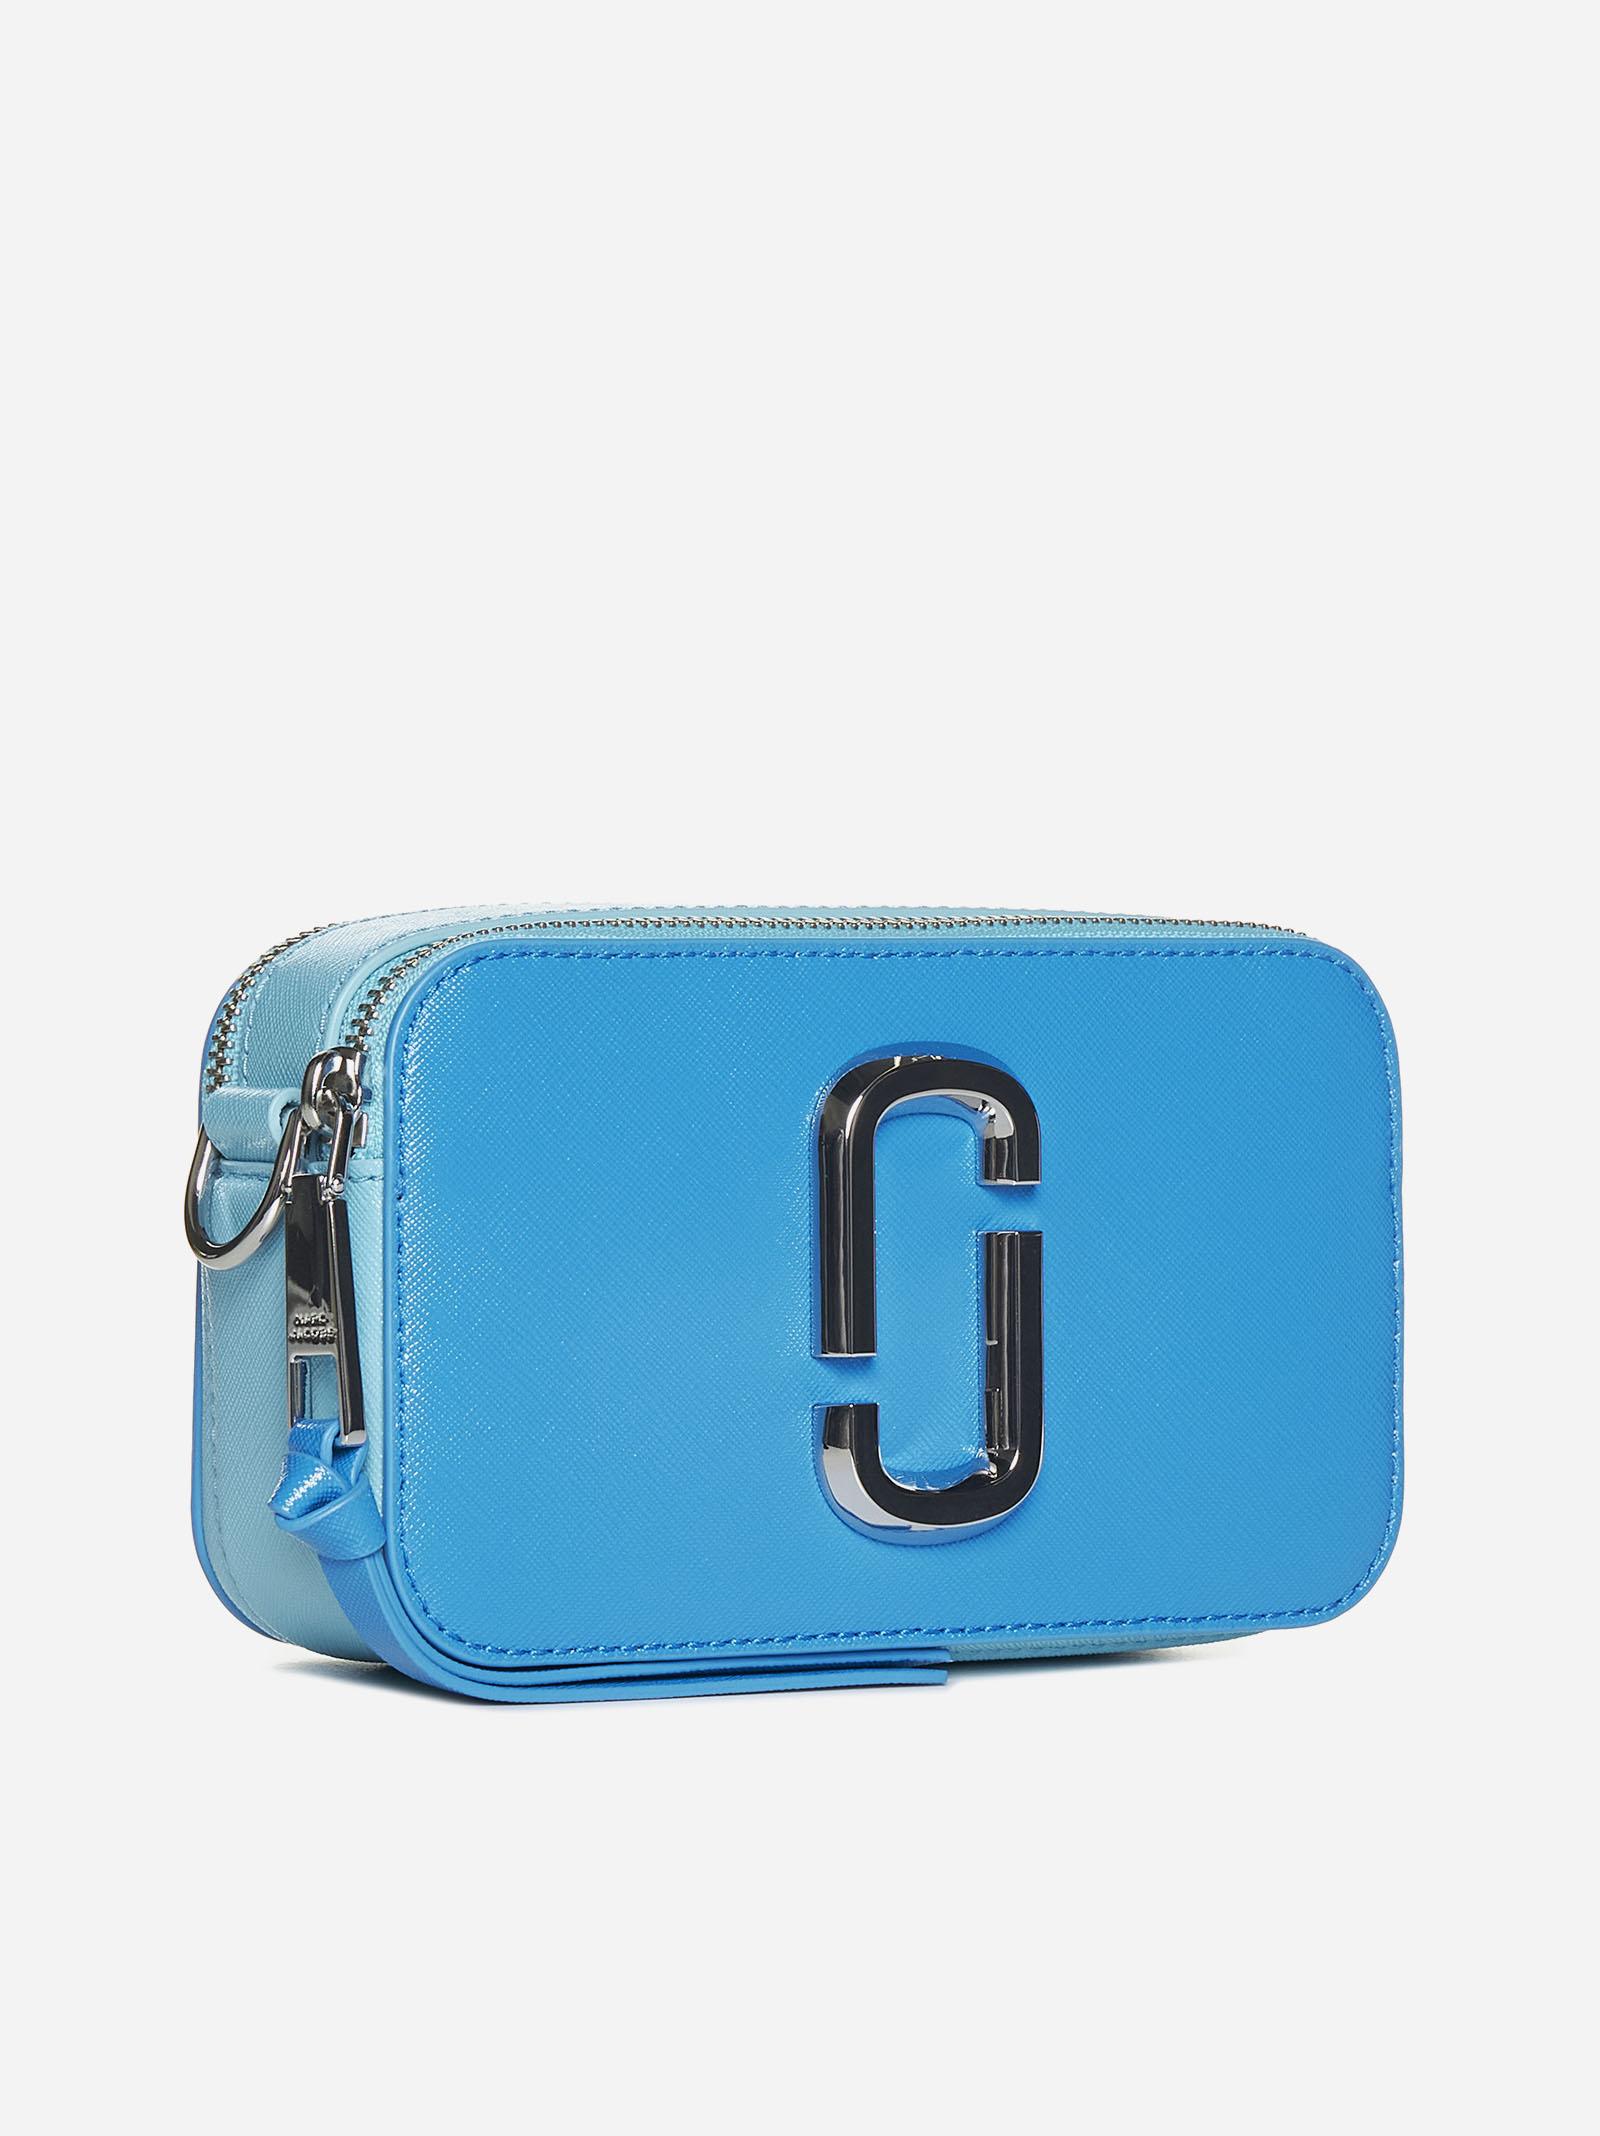 Marc Jacobs The Bi-color Snapshot Bag in Blue